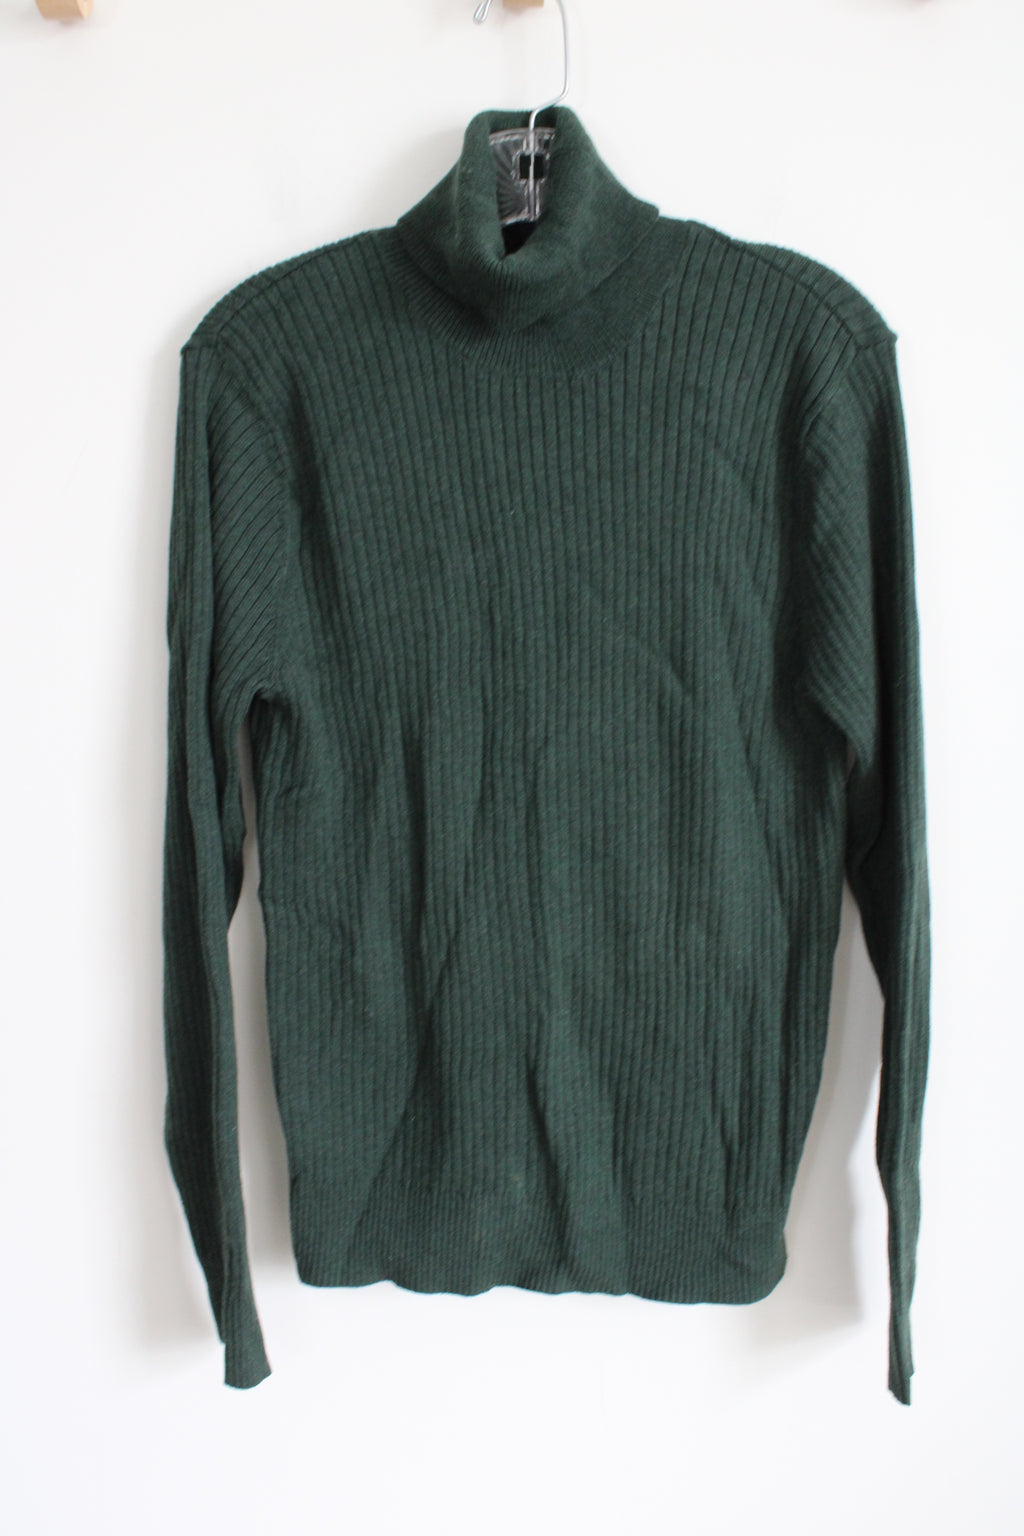 Gap Vintage Dark Gray Ribbed Turtleneck Sweater | M